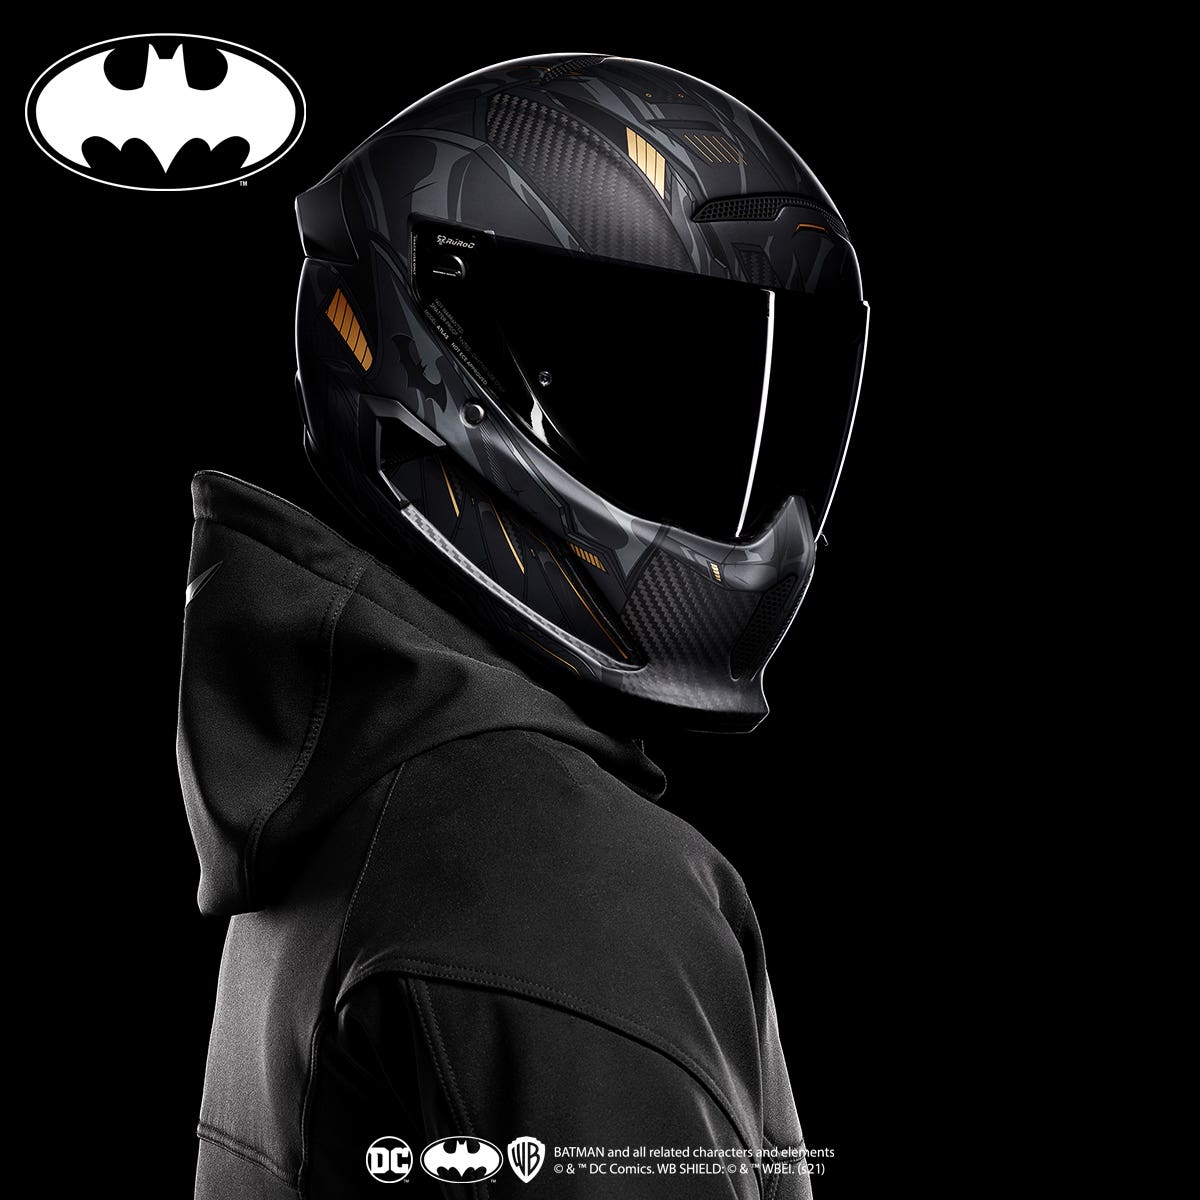 Ruroc | Atlas  Batman | Full Face Motorcycle Helmet | Protection  Re-Engineered